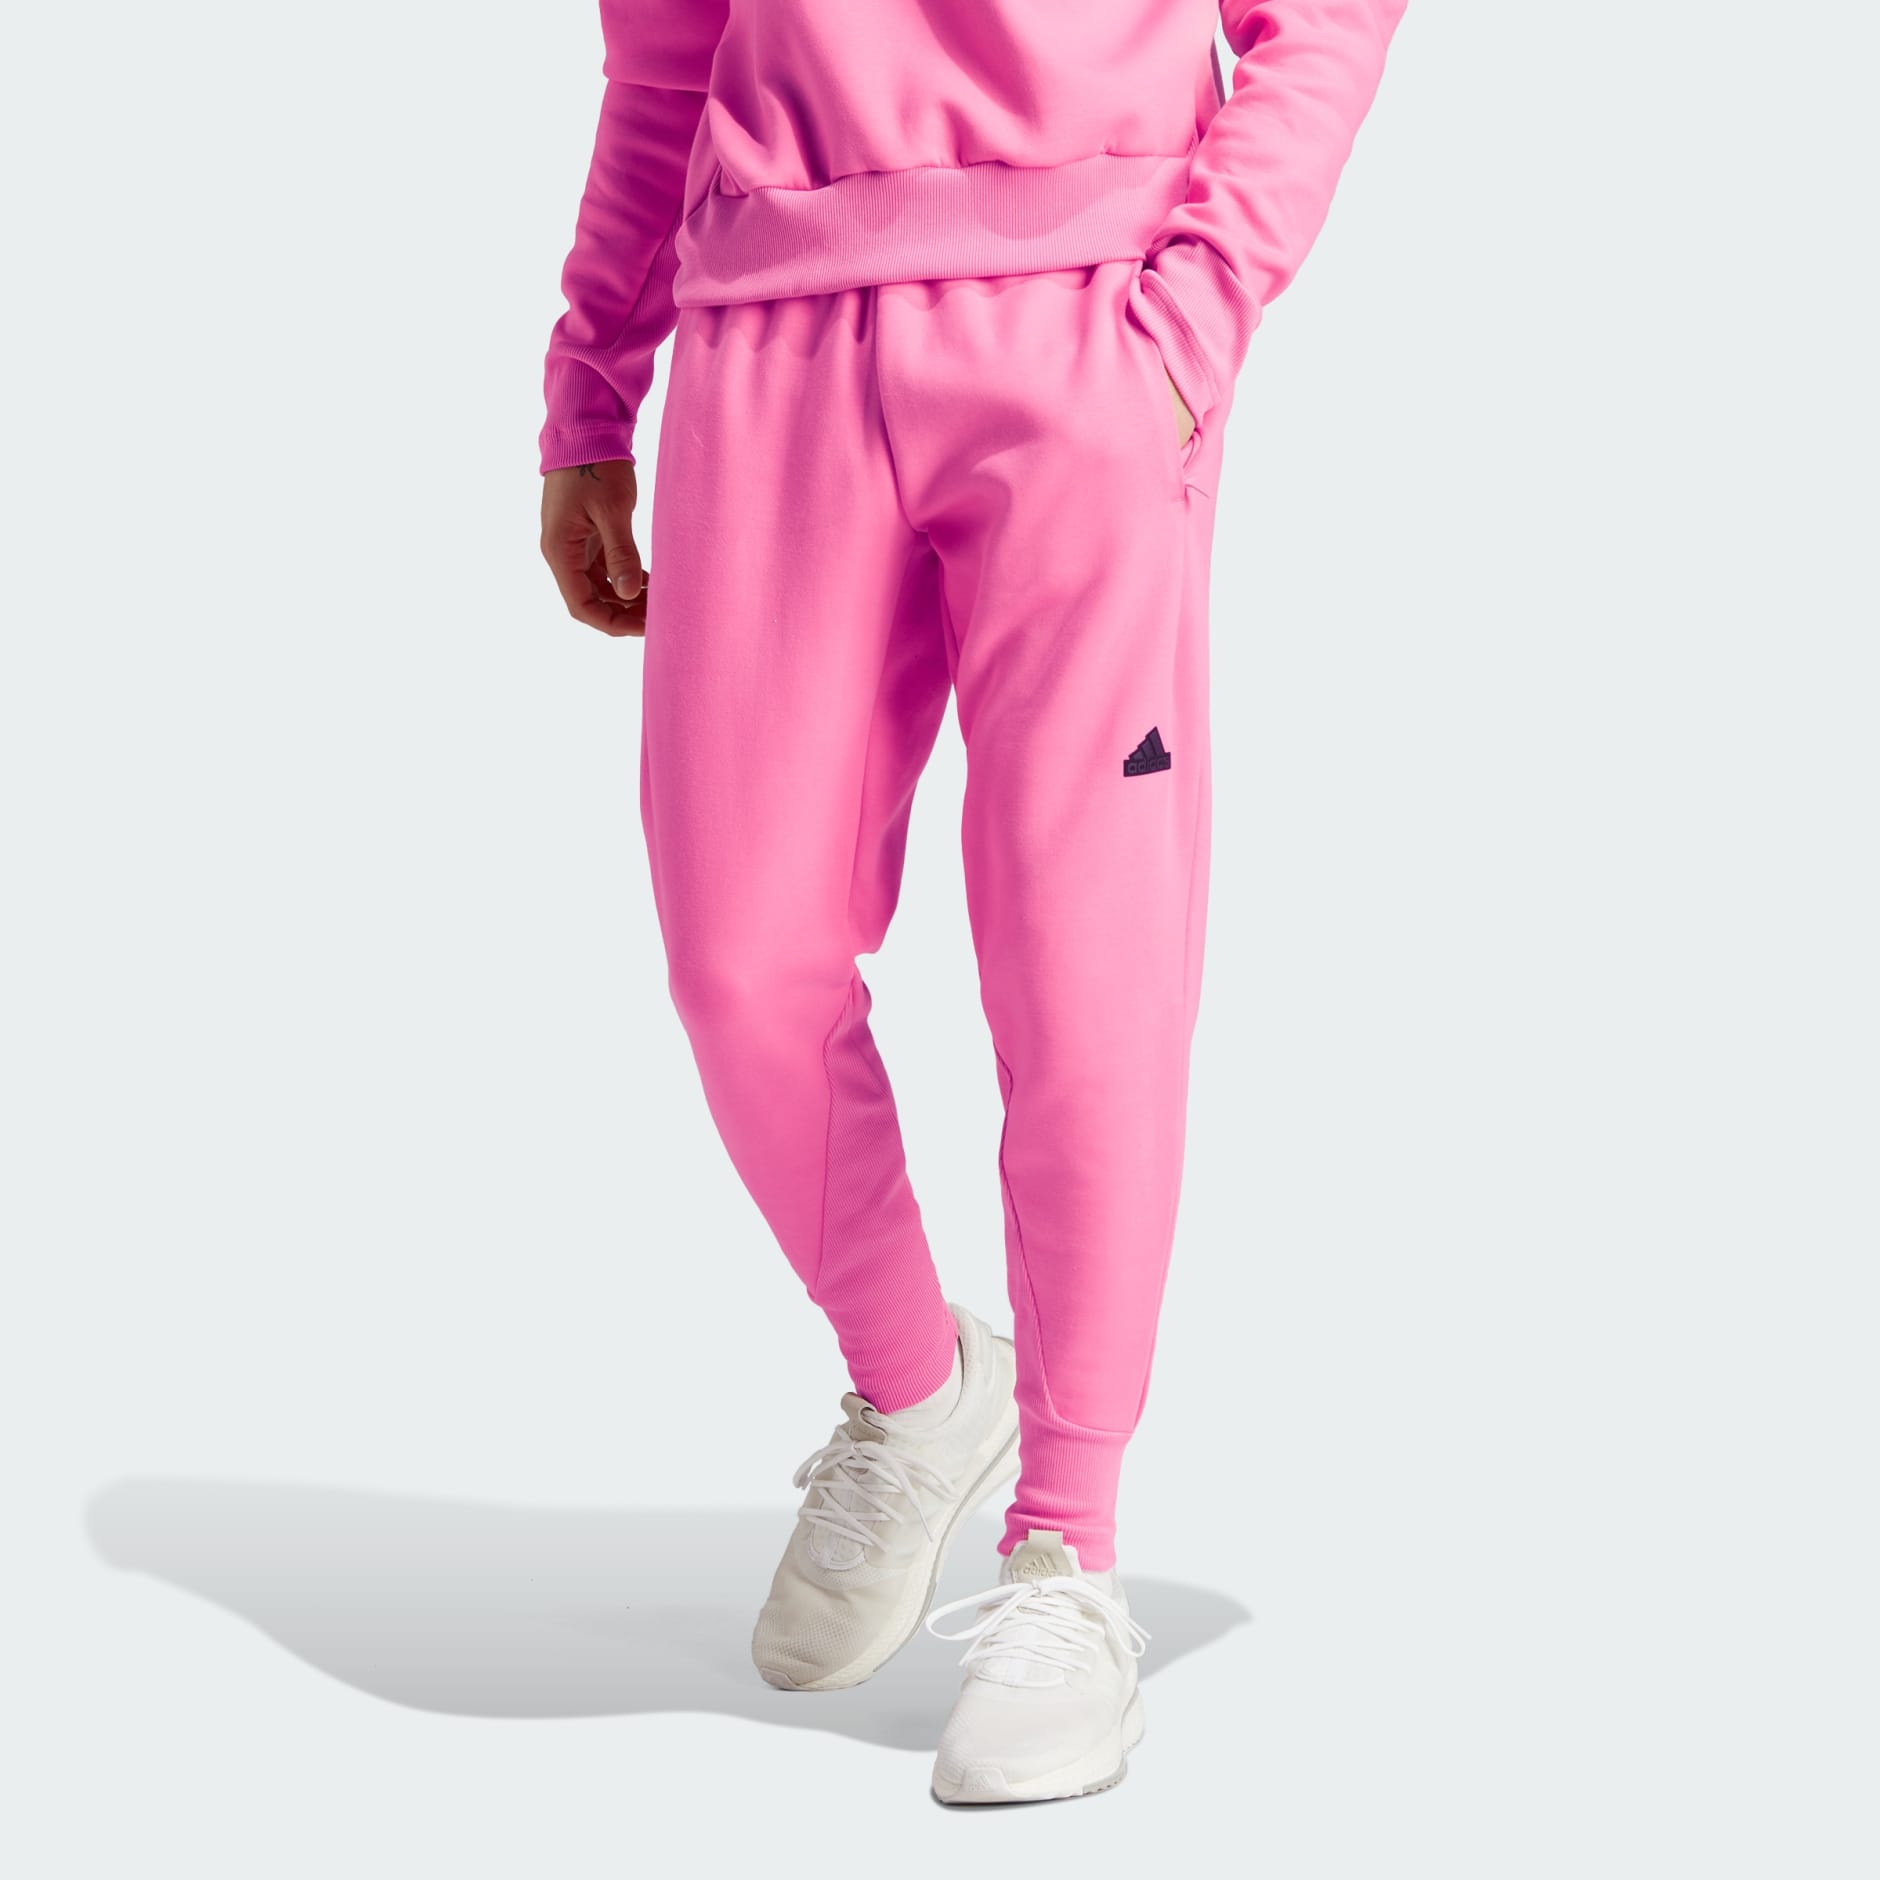 Adidas Women's High Rise Pants Pink